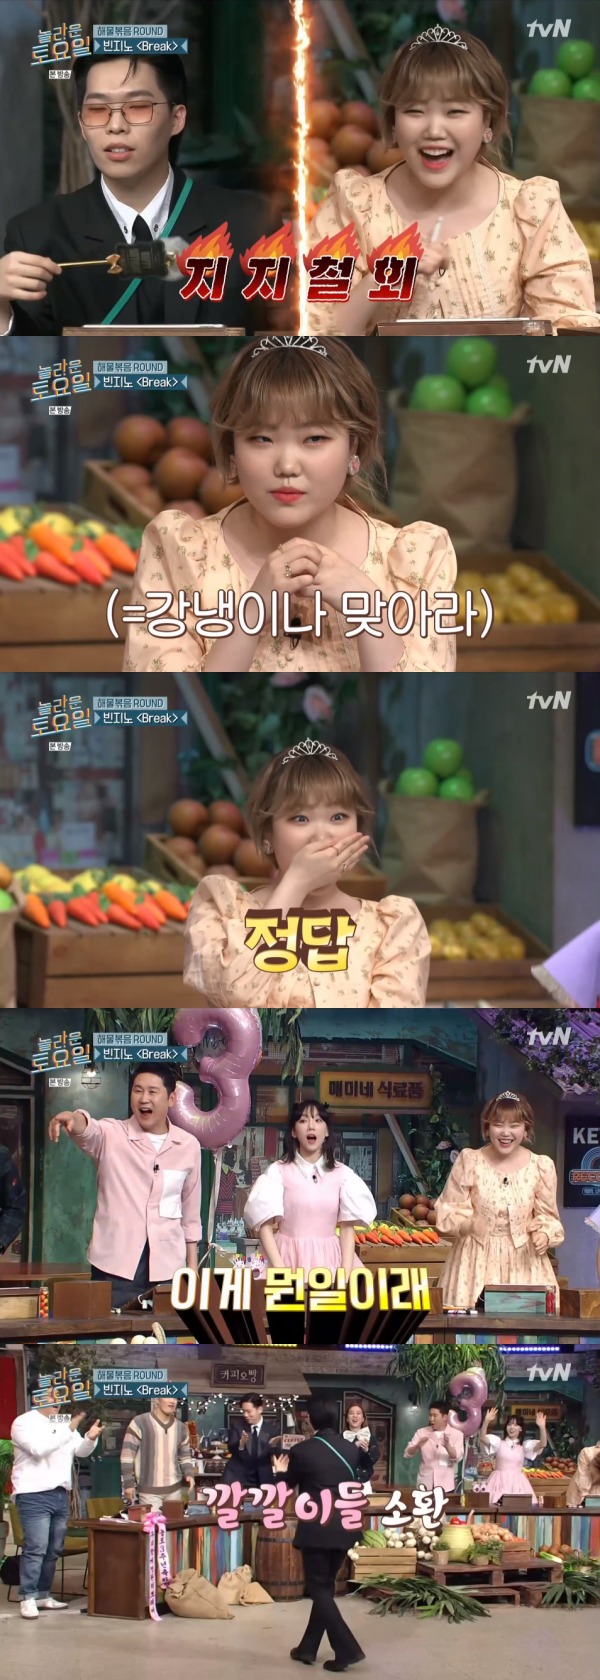 tvN '놀라운토요일' 방송 화면 캡처 © 뉴스1